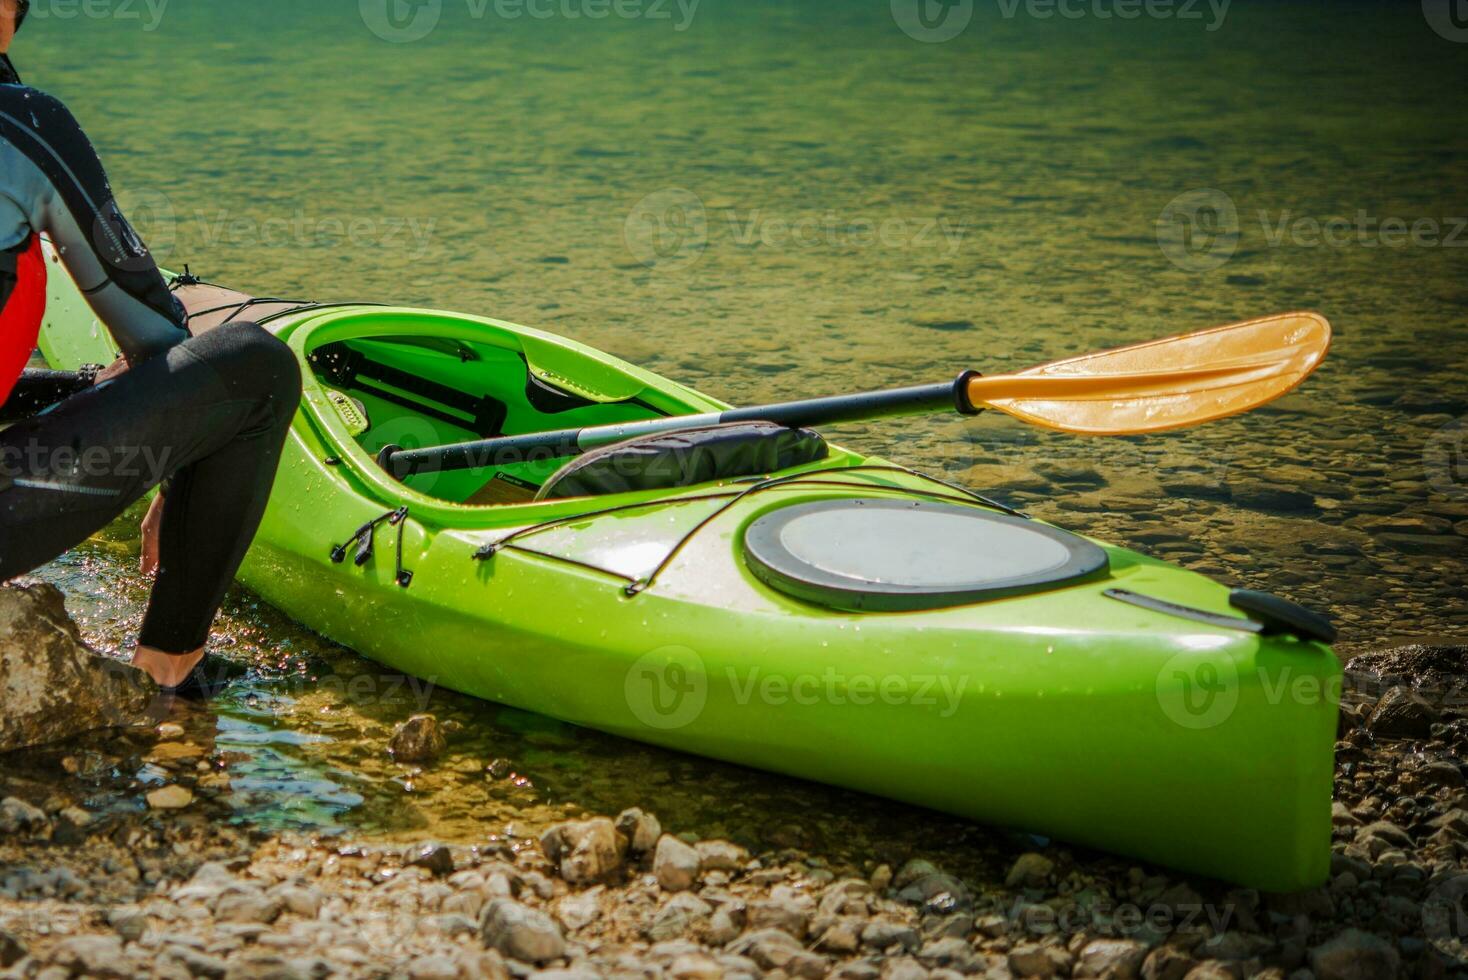 kayak tournée des loisirs photo